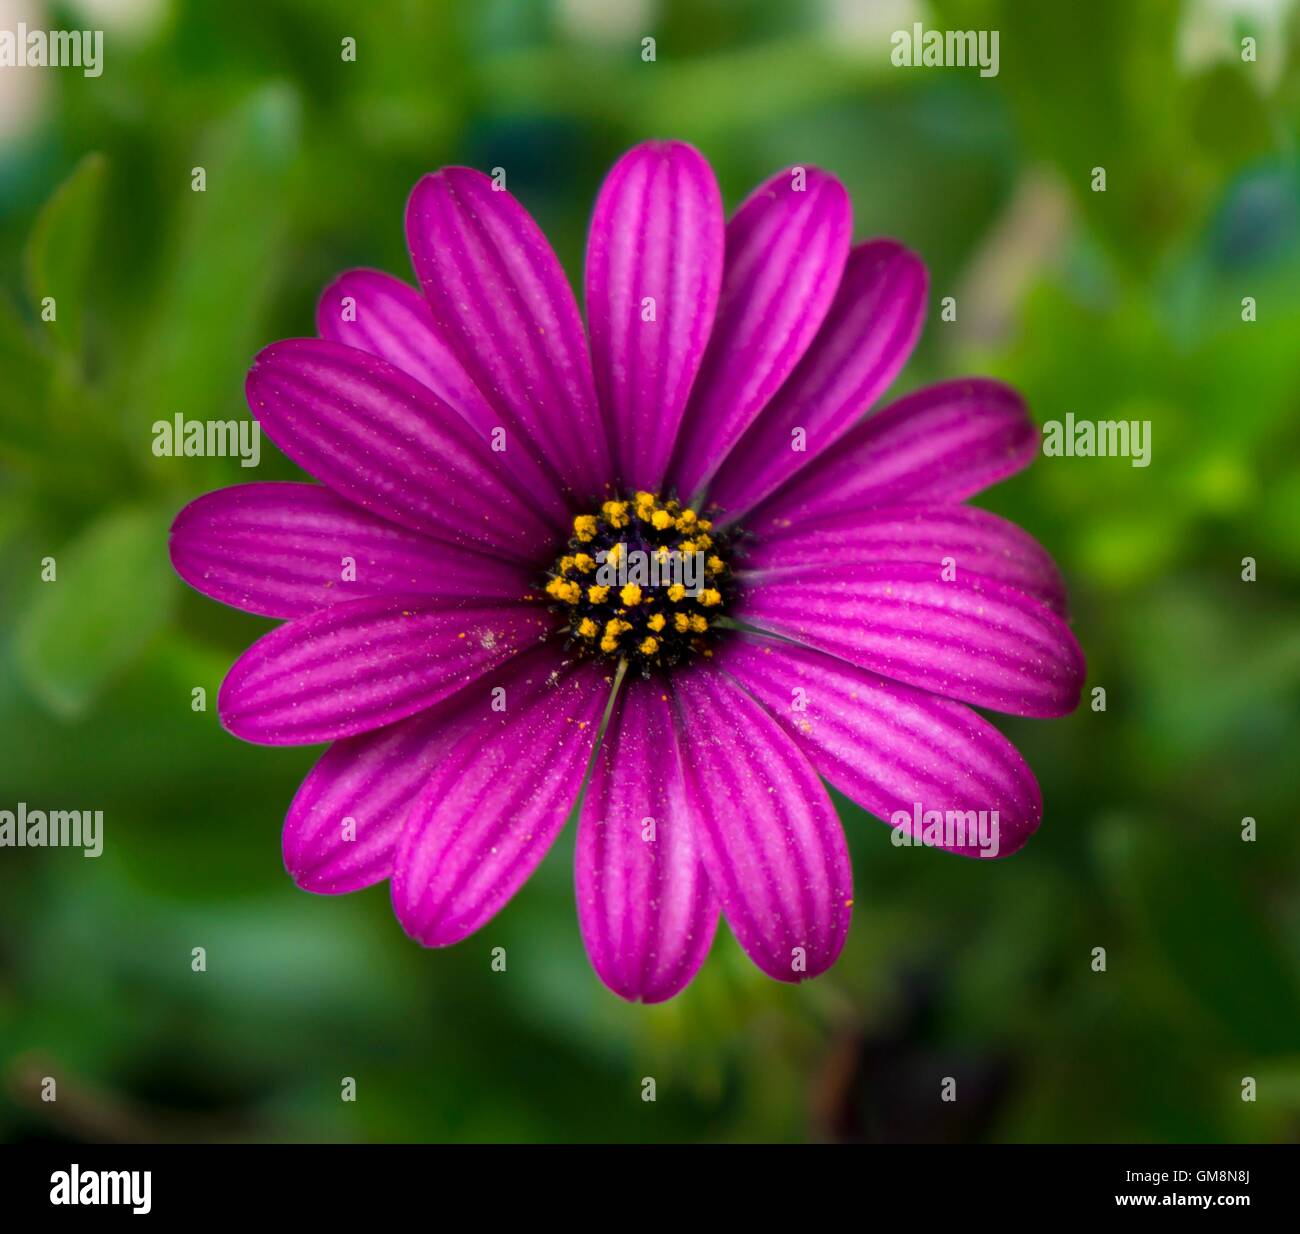 flower close up Stock Photo